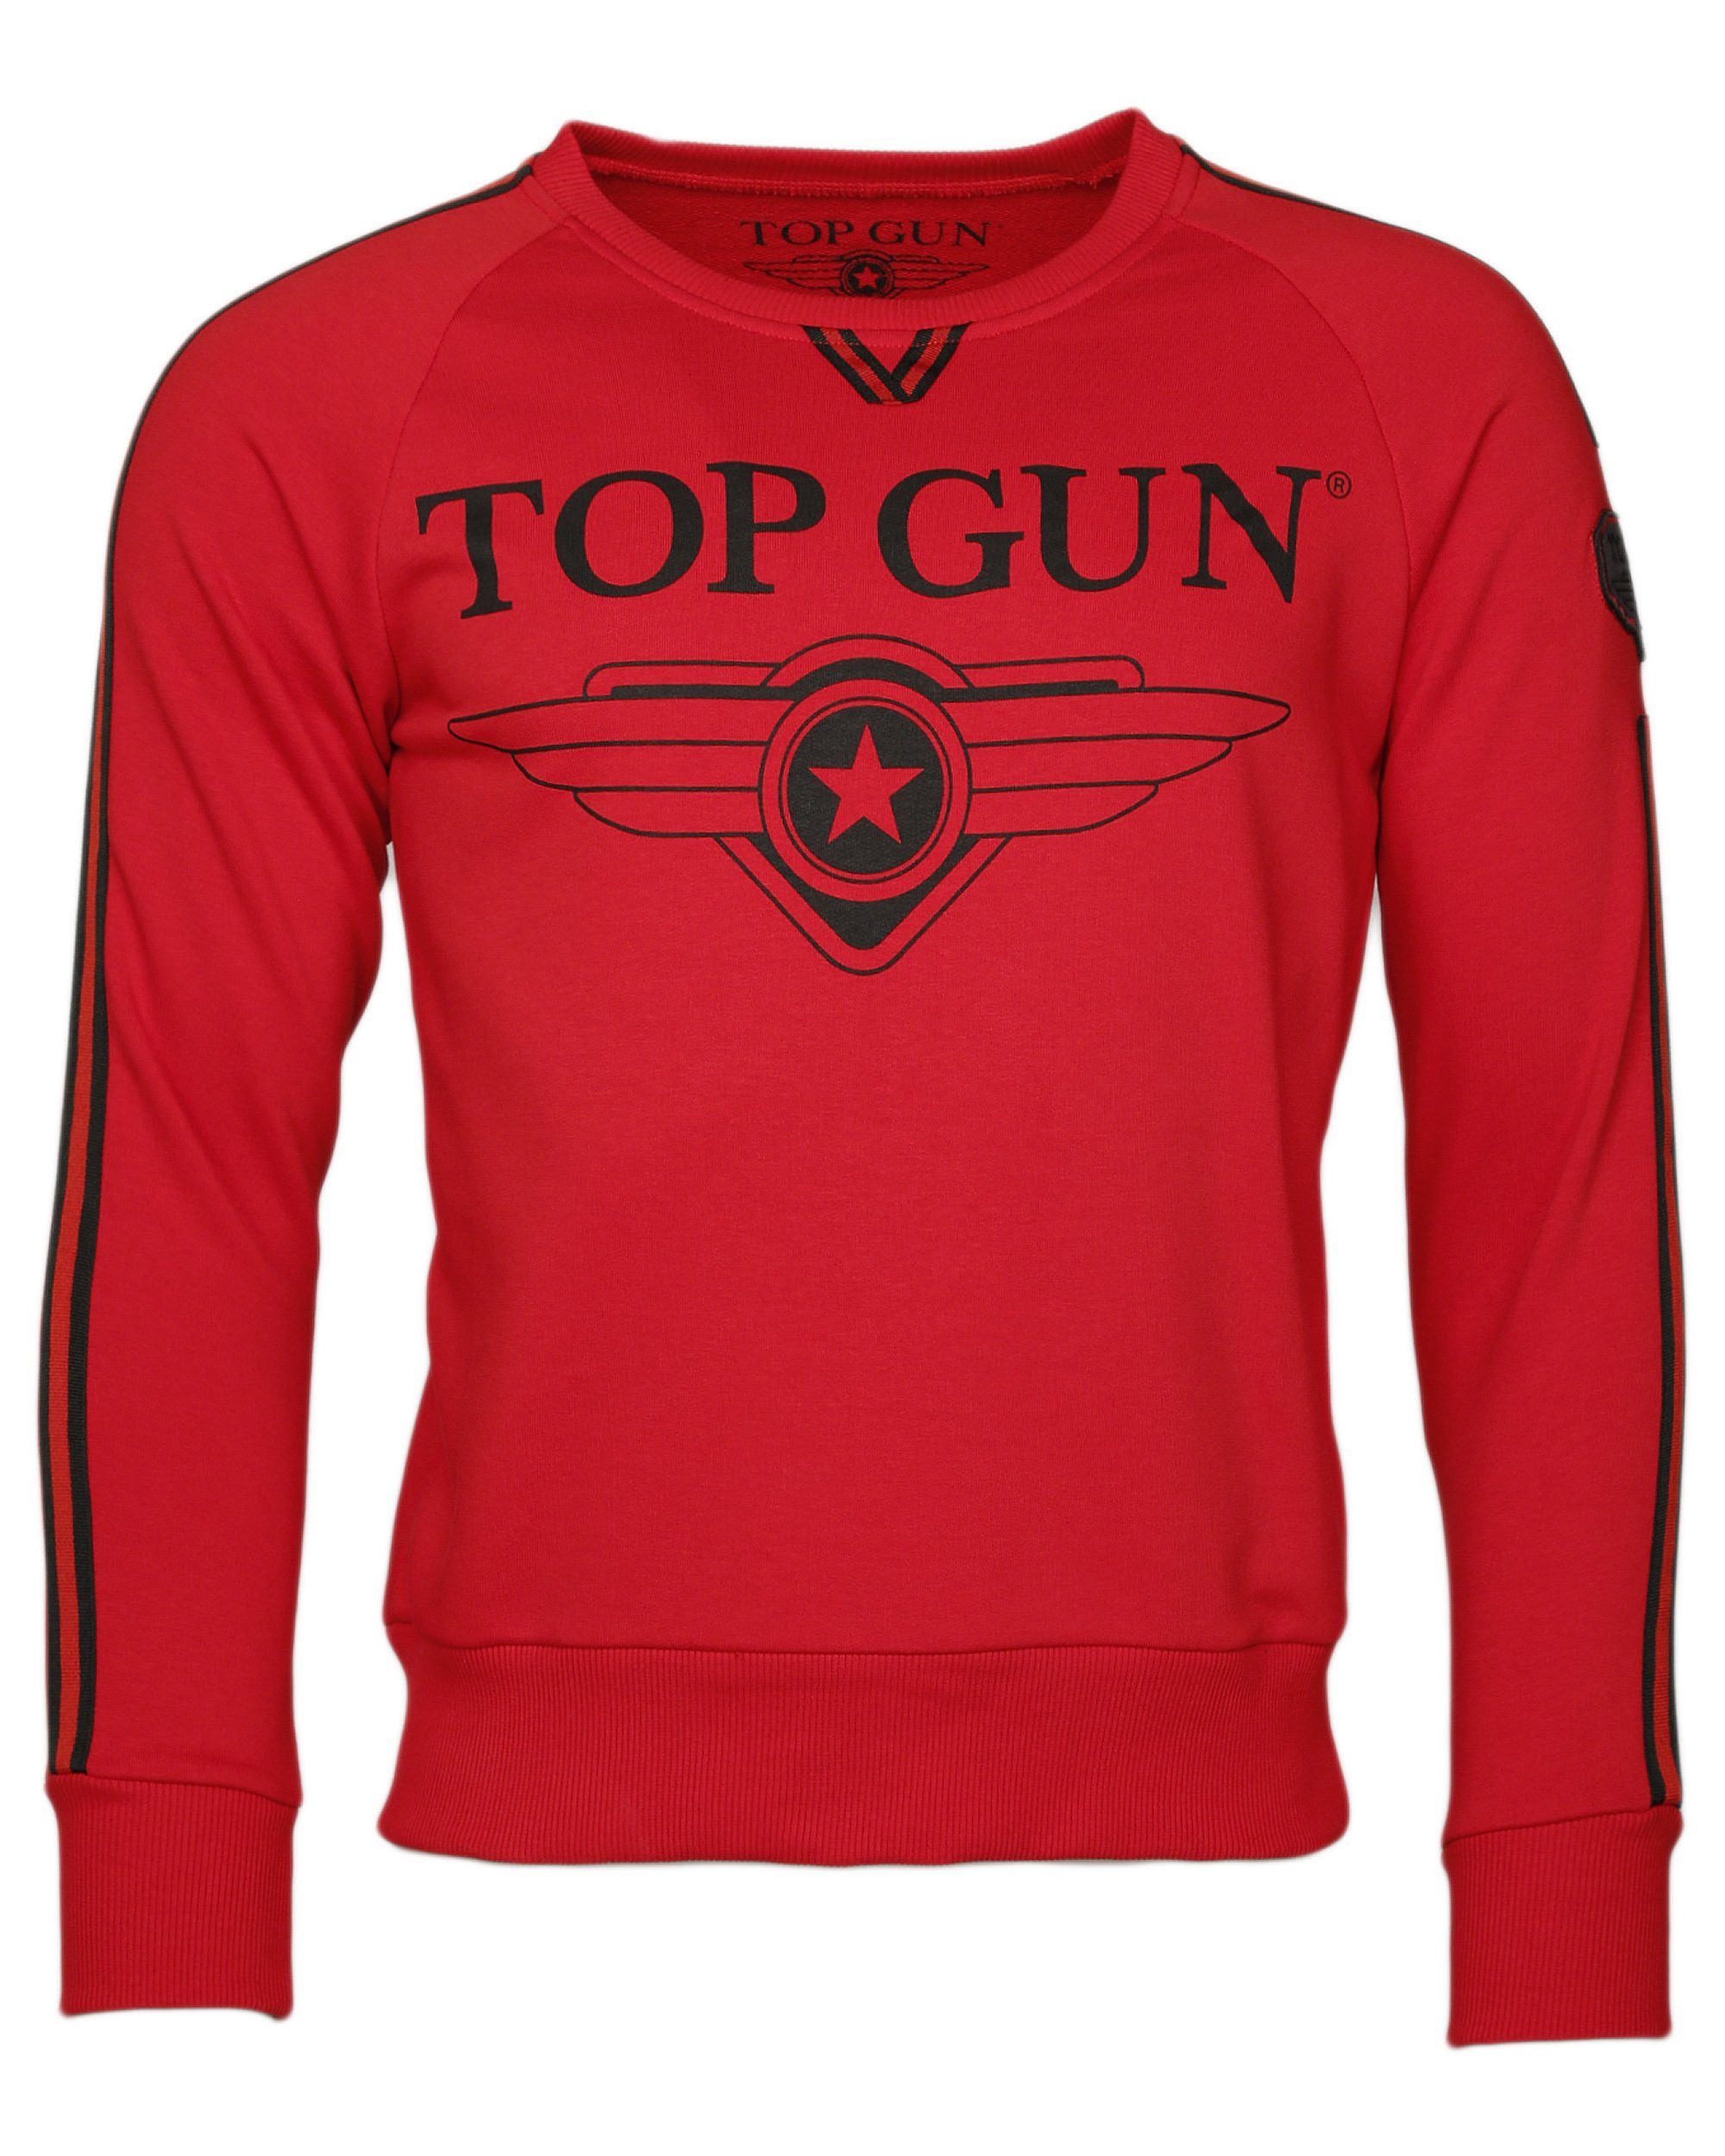 TOP GUN Sweater TG20191013 Streak red